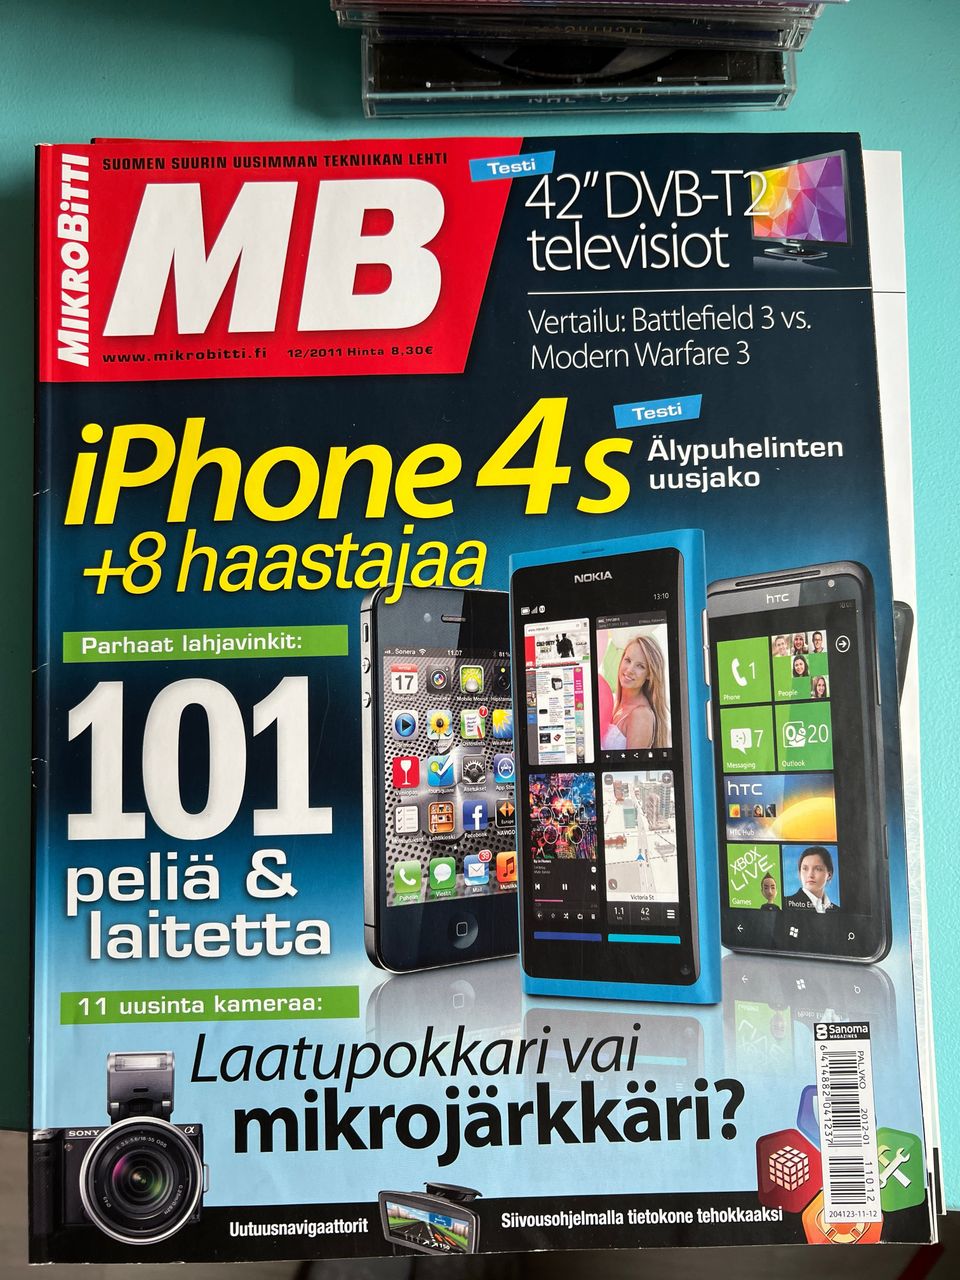 MikroBitti lehti 12/2011